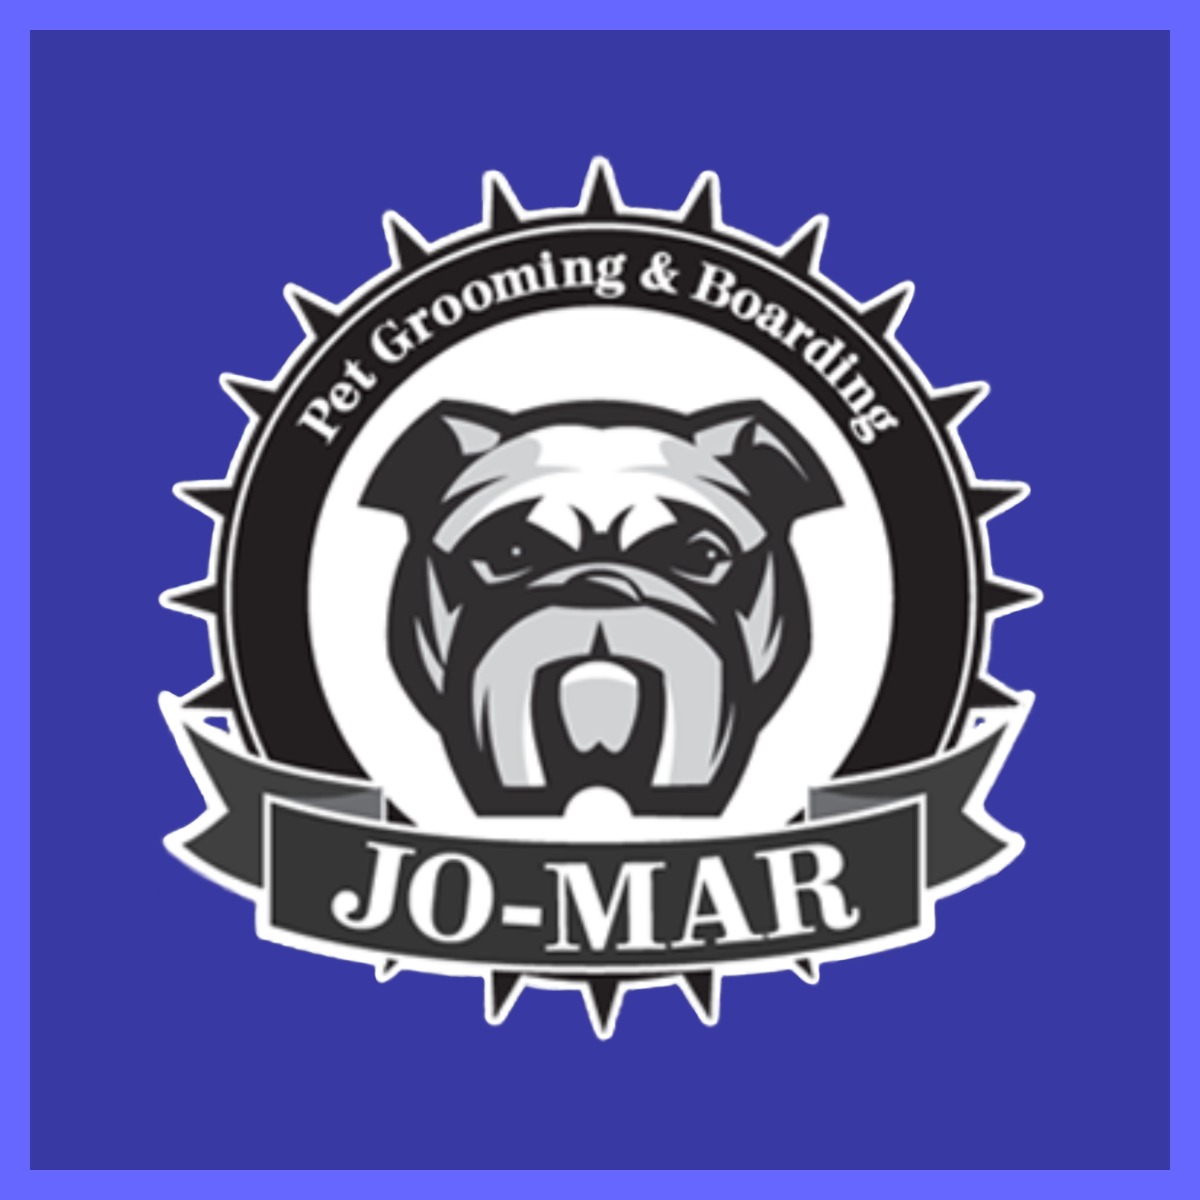 Jo-Mar Grooming Website